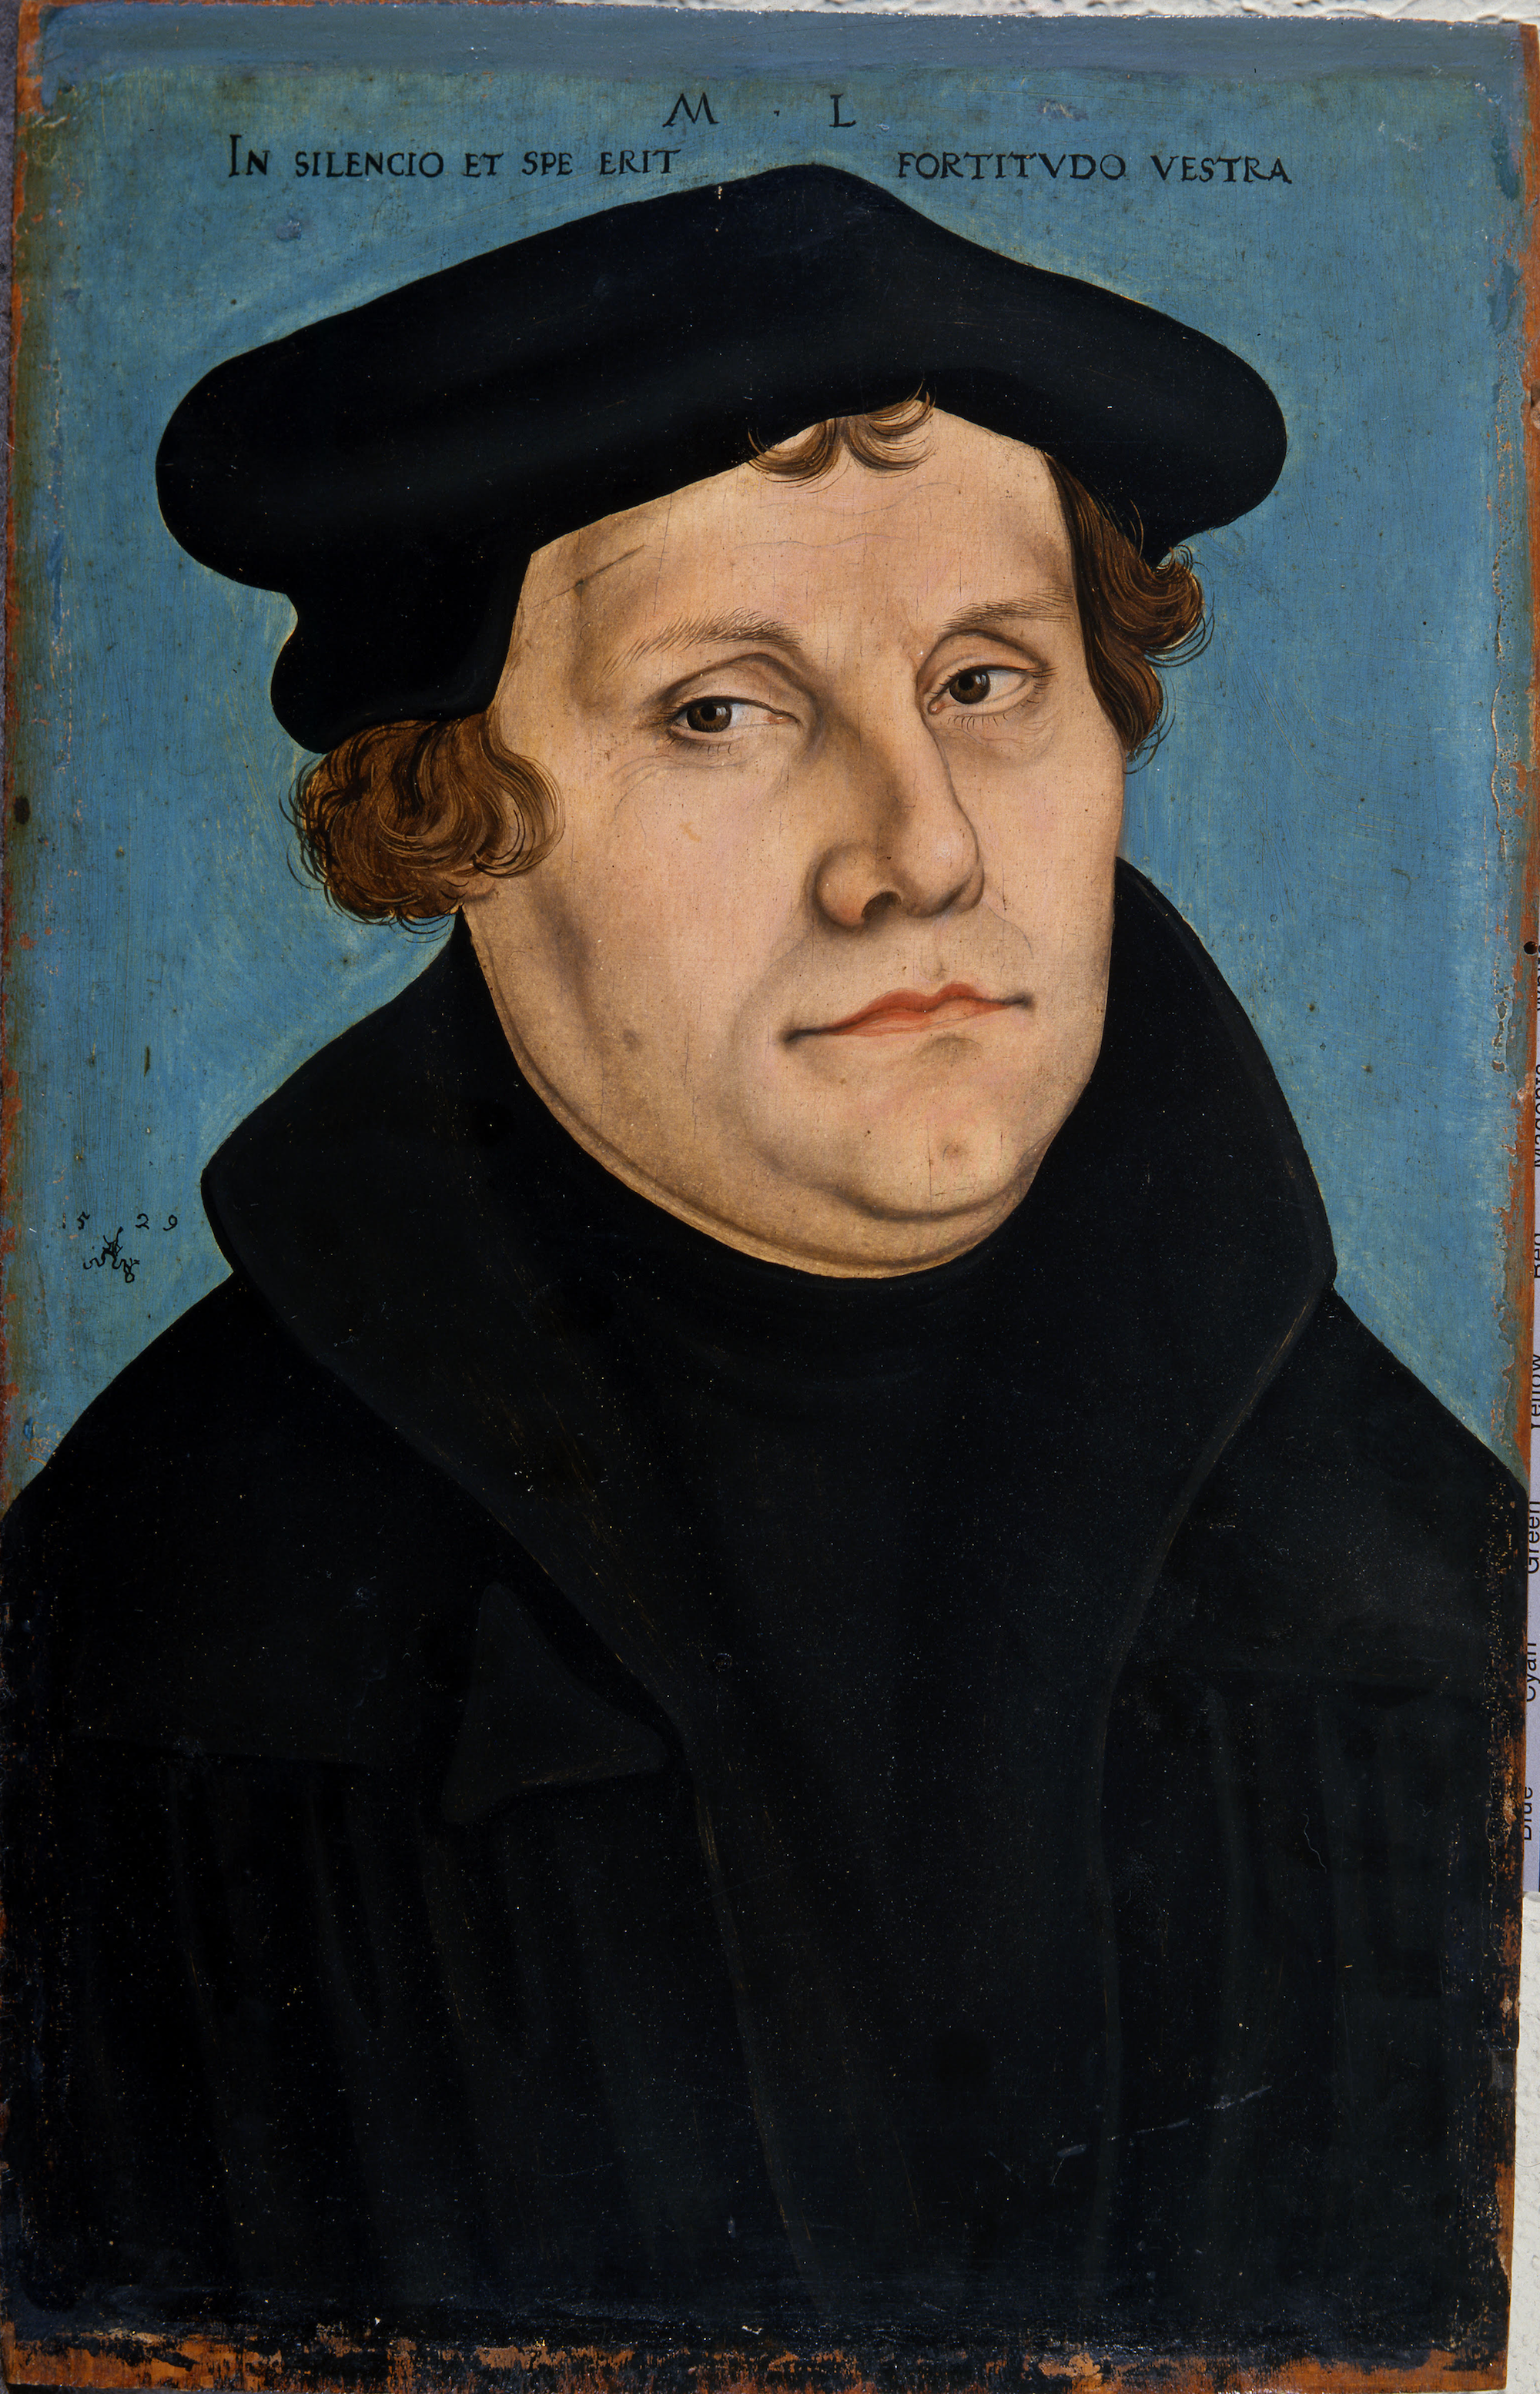 Martin Luther by Lucas Cranach the Elder - 1529 - 38,3 X 24 cm Museo Poldi Pezzoli